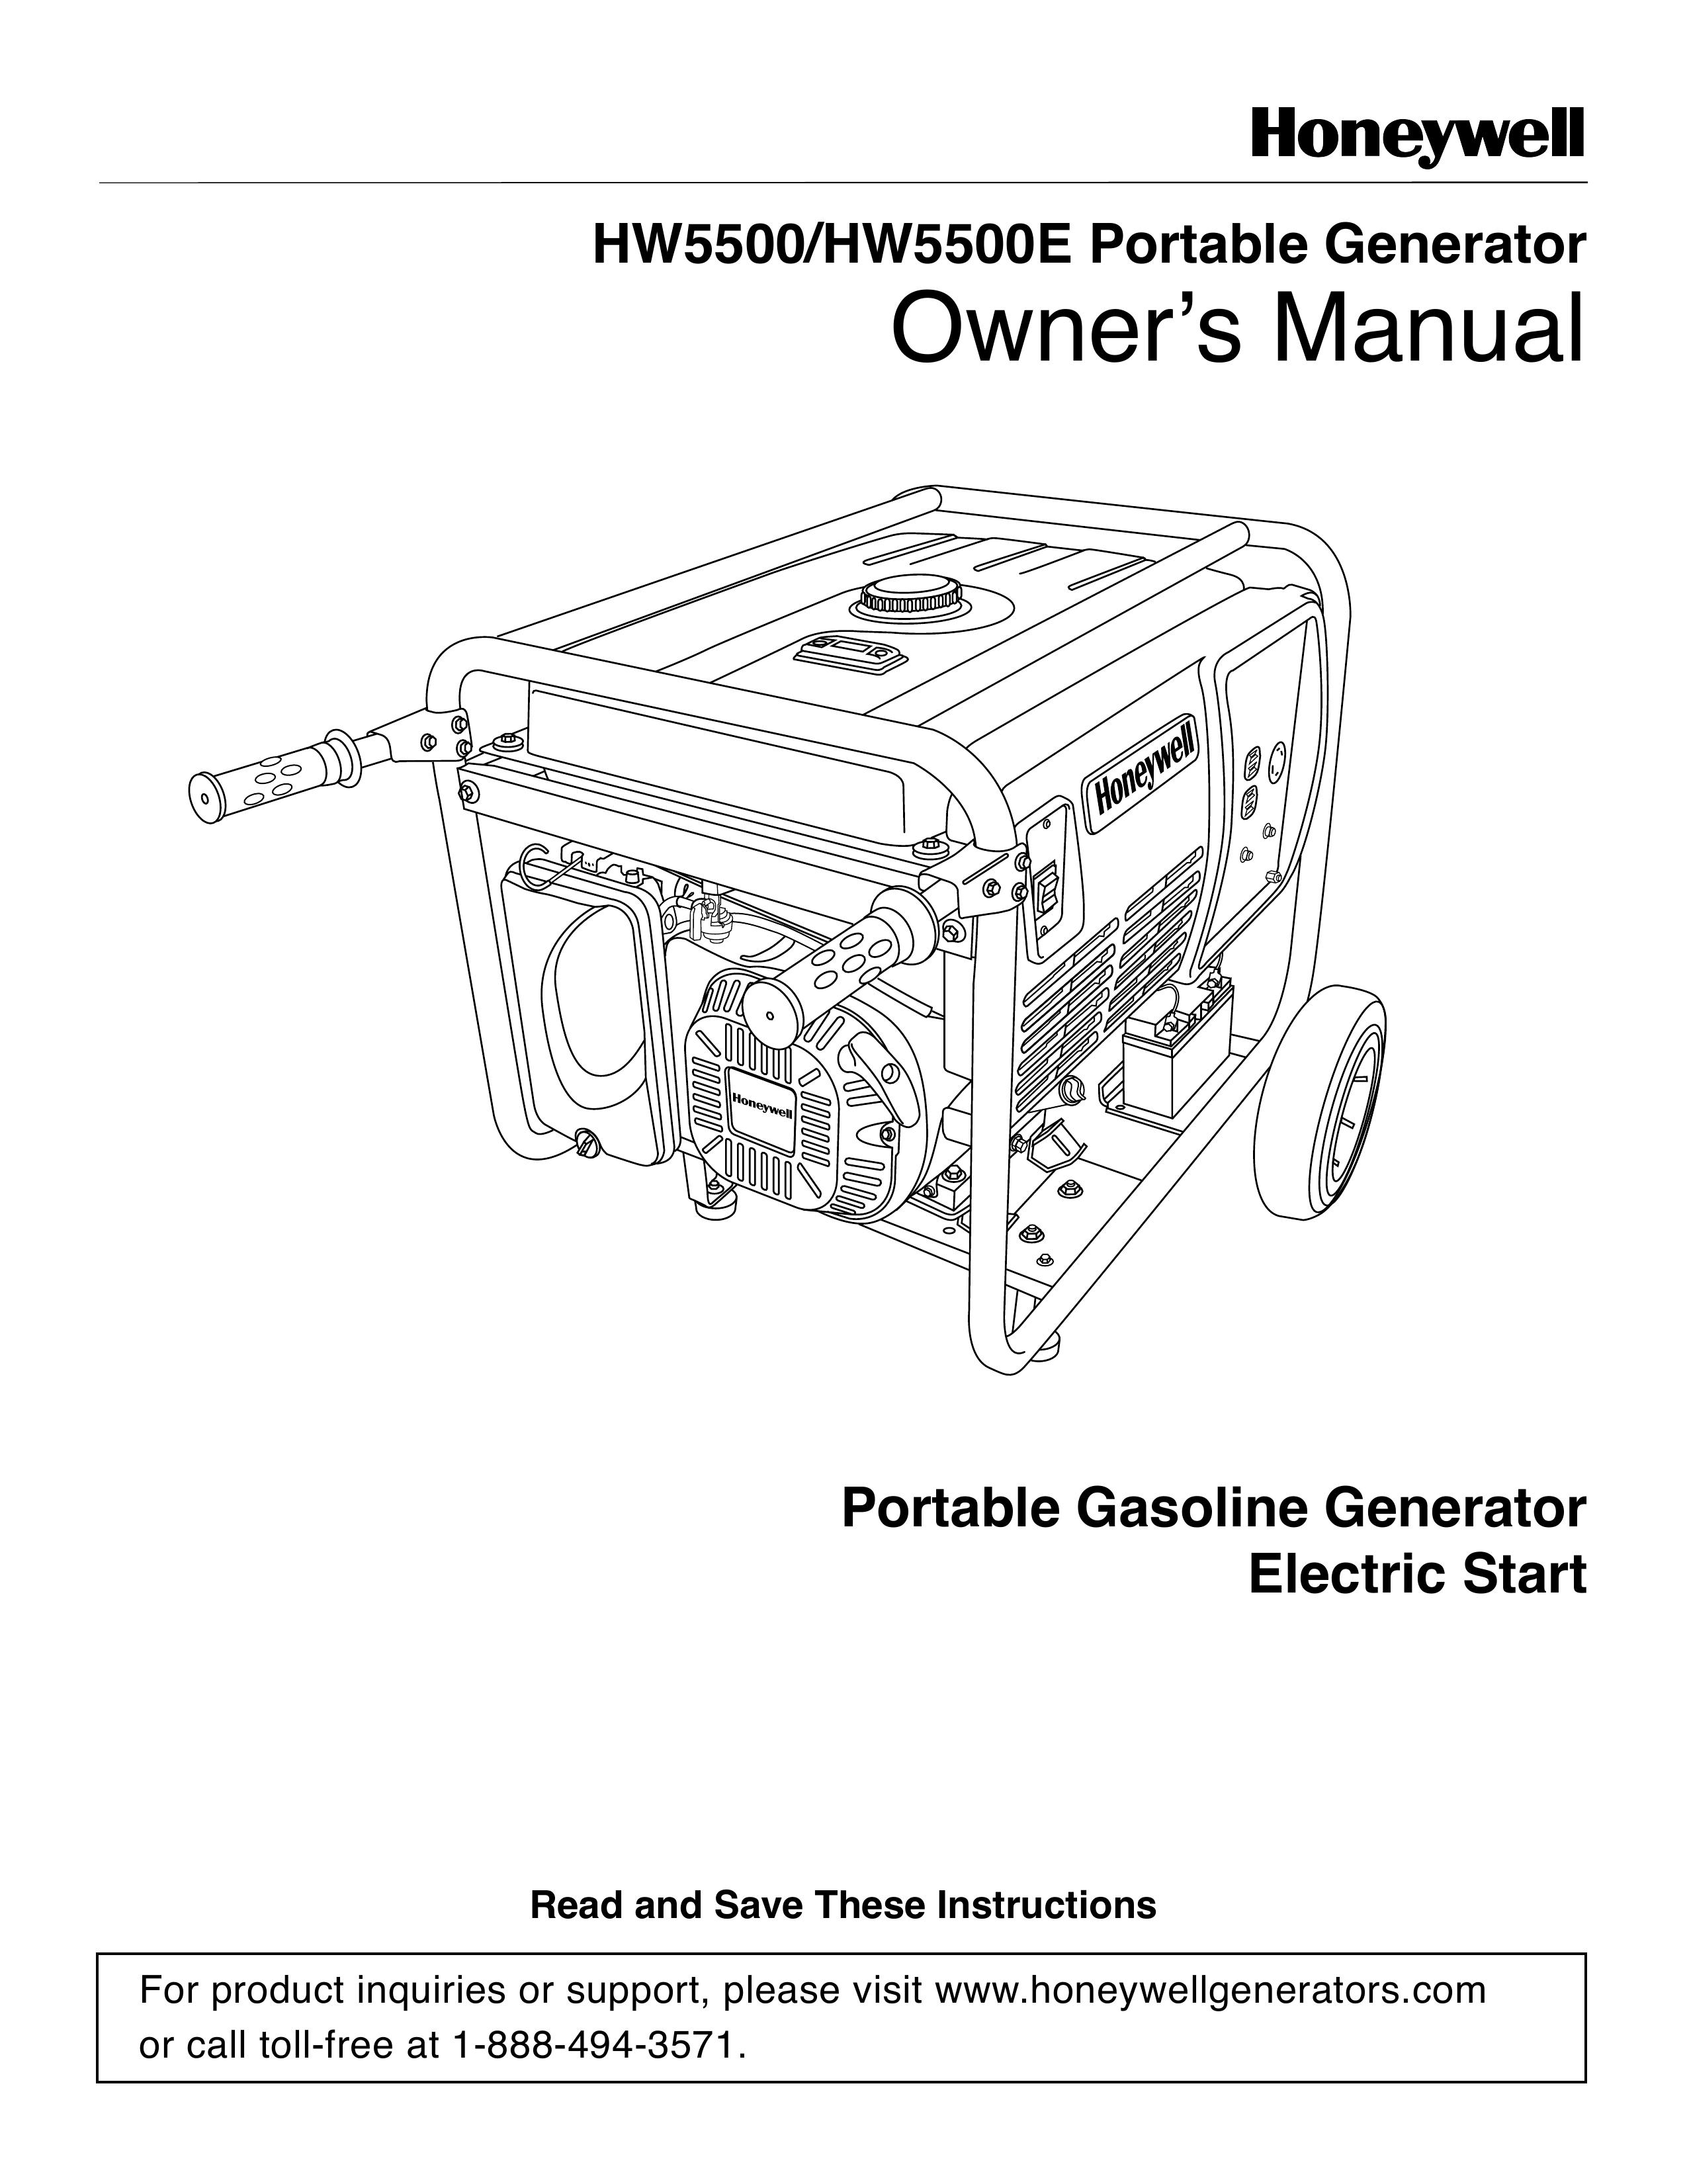 Honeywell HW5500 Portable Generator User Manual